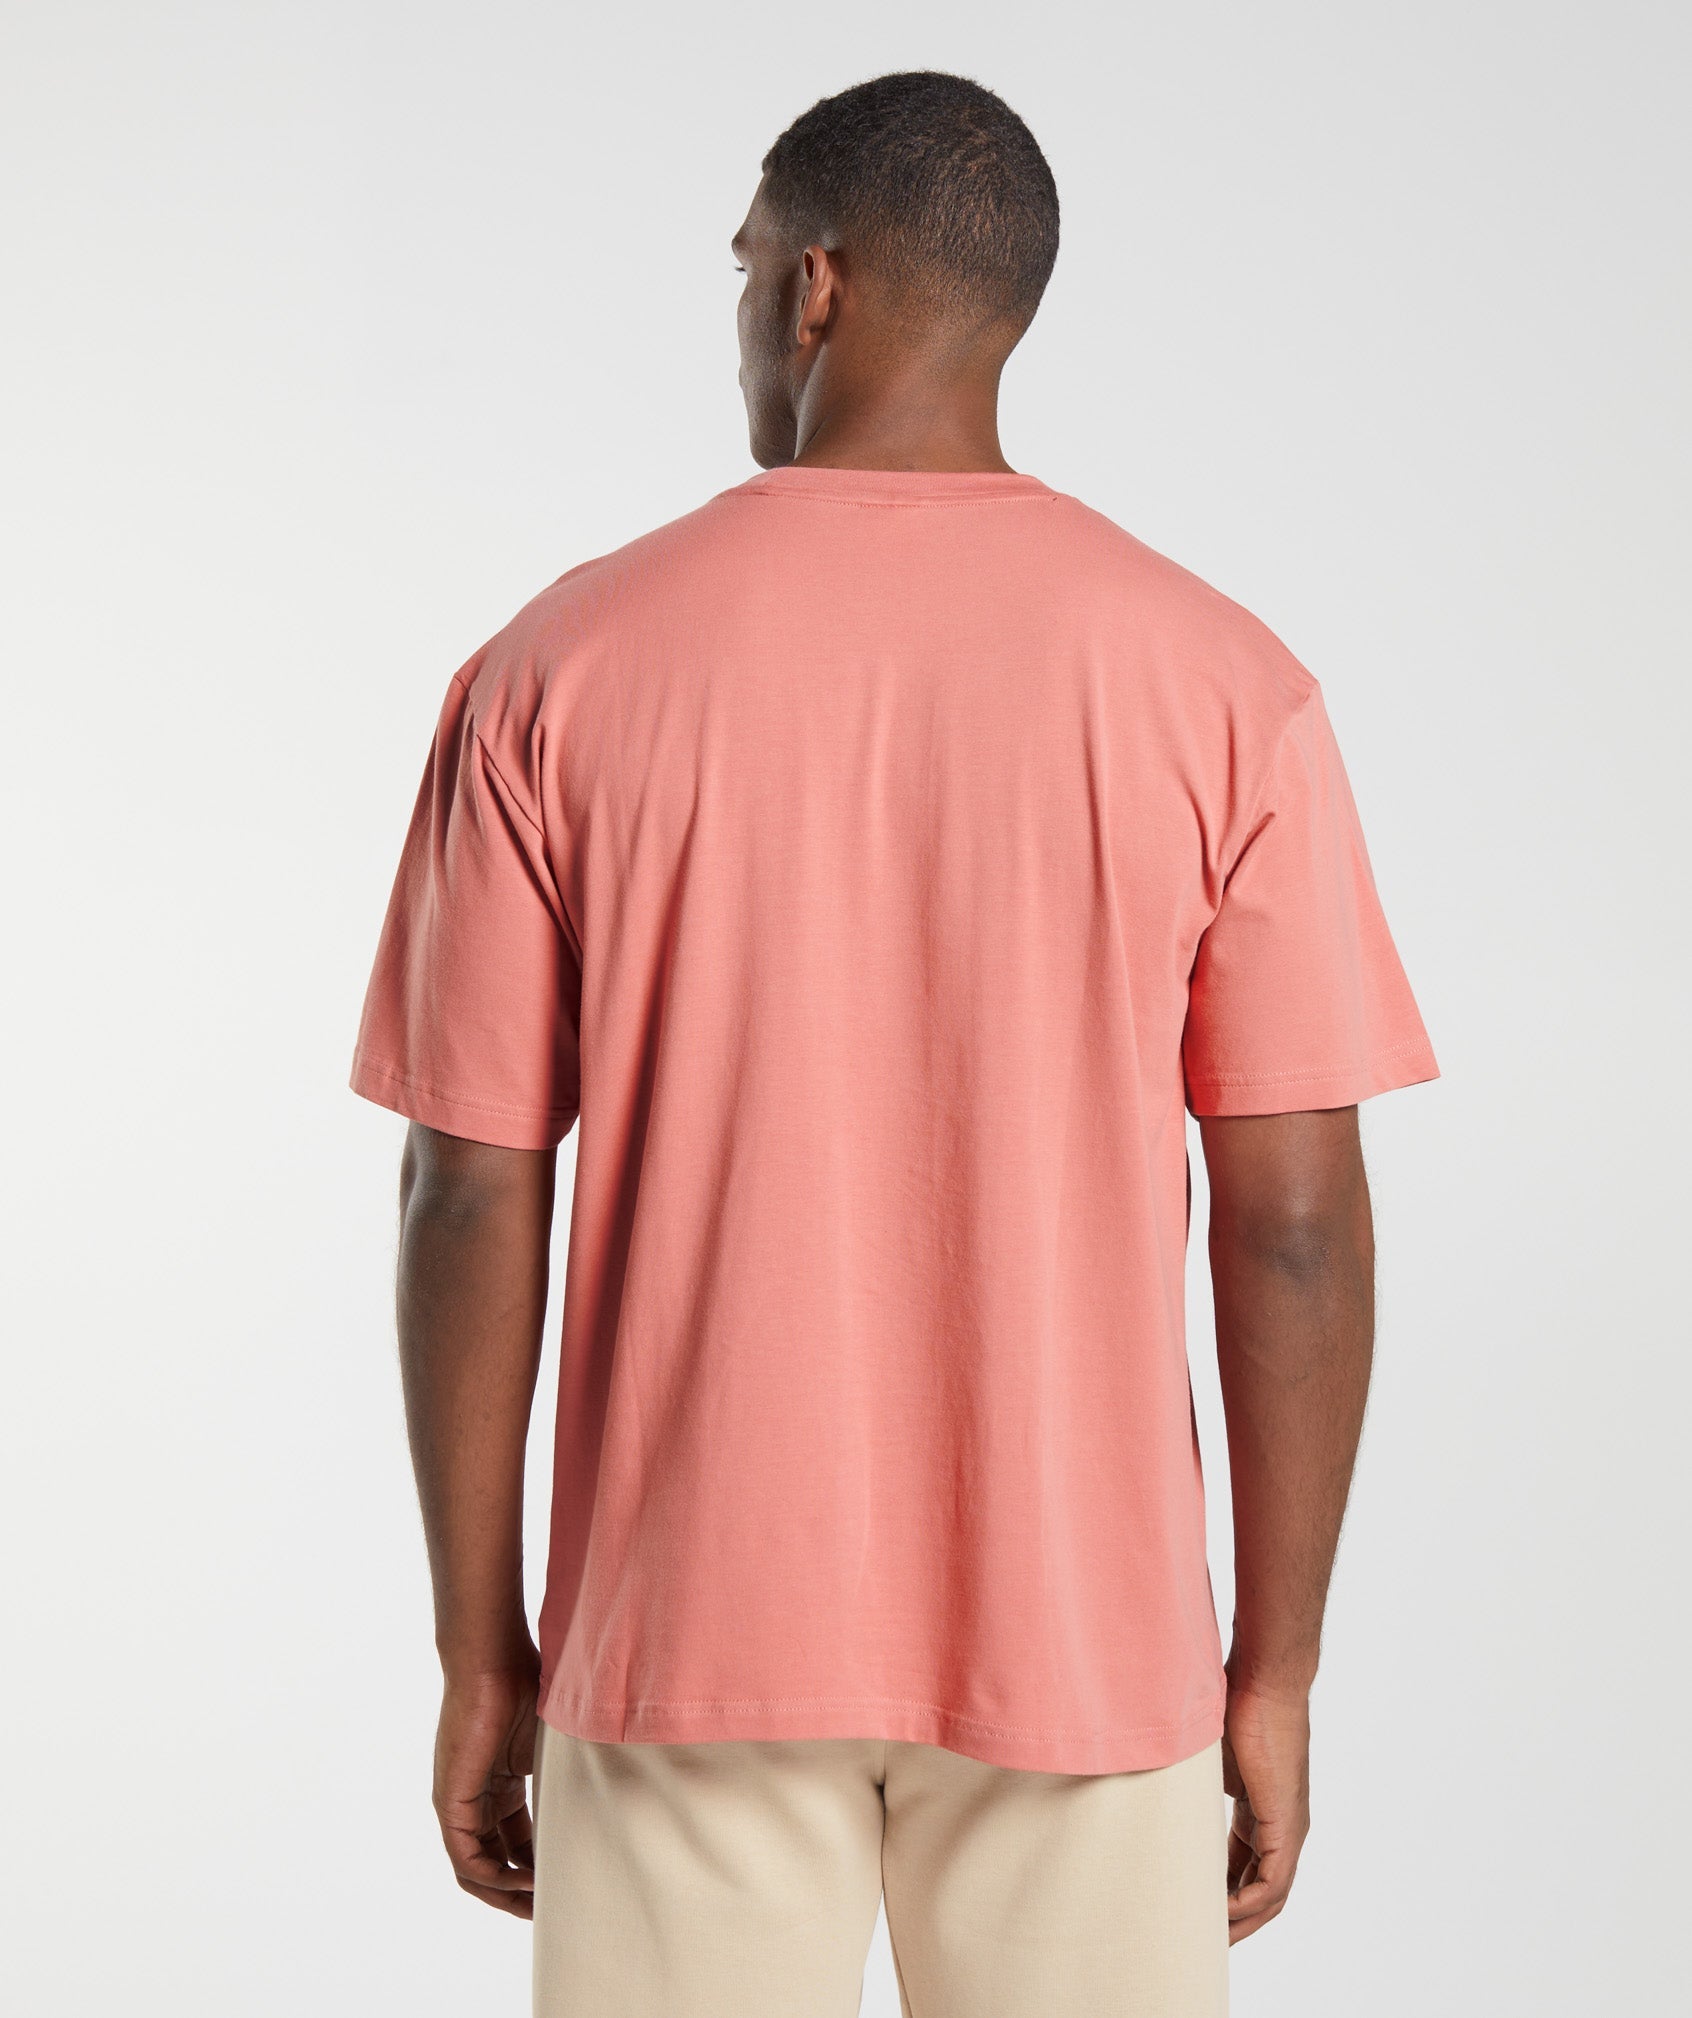 Essential Seamless T-Shirt Crew Neck L/S pink